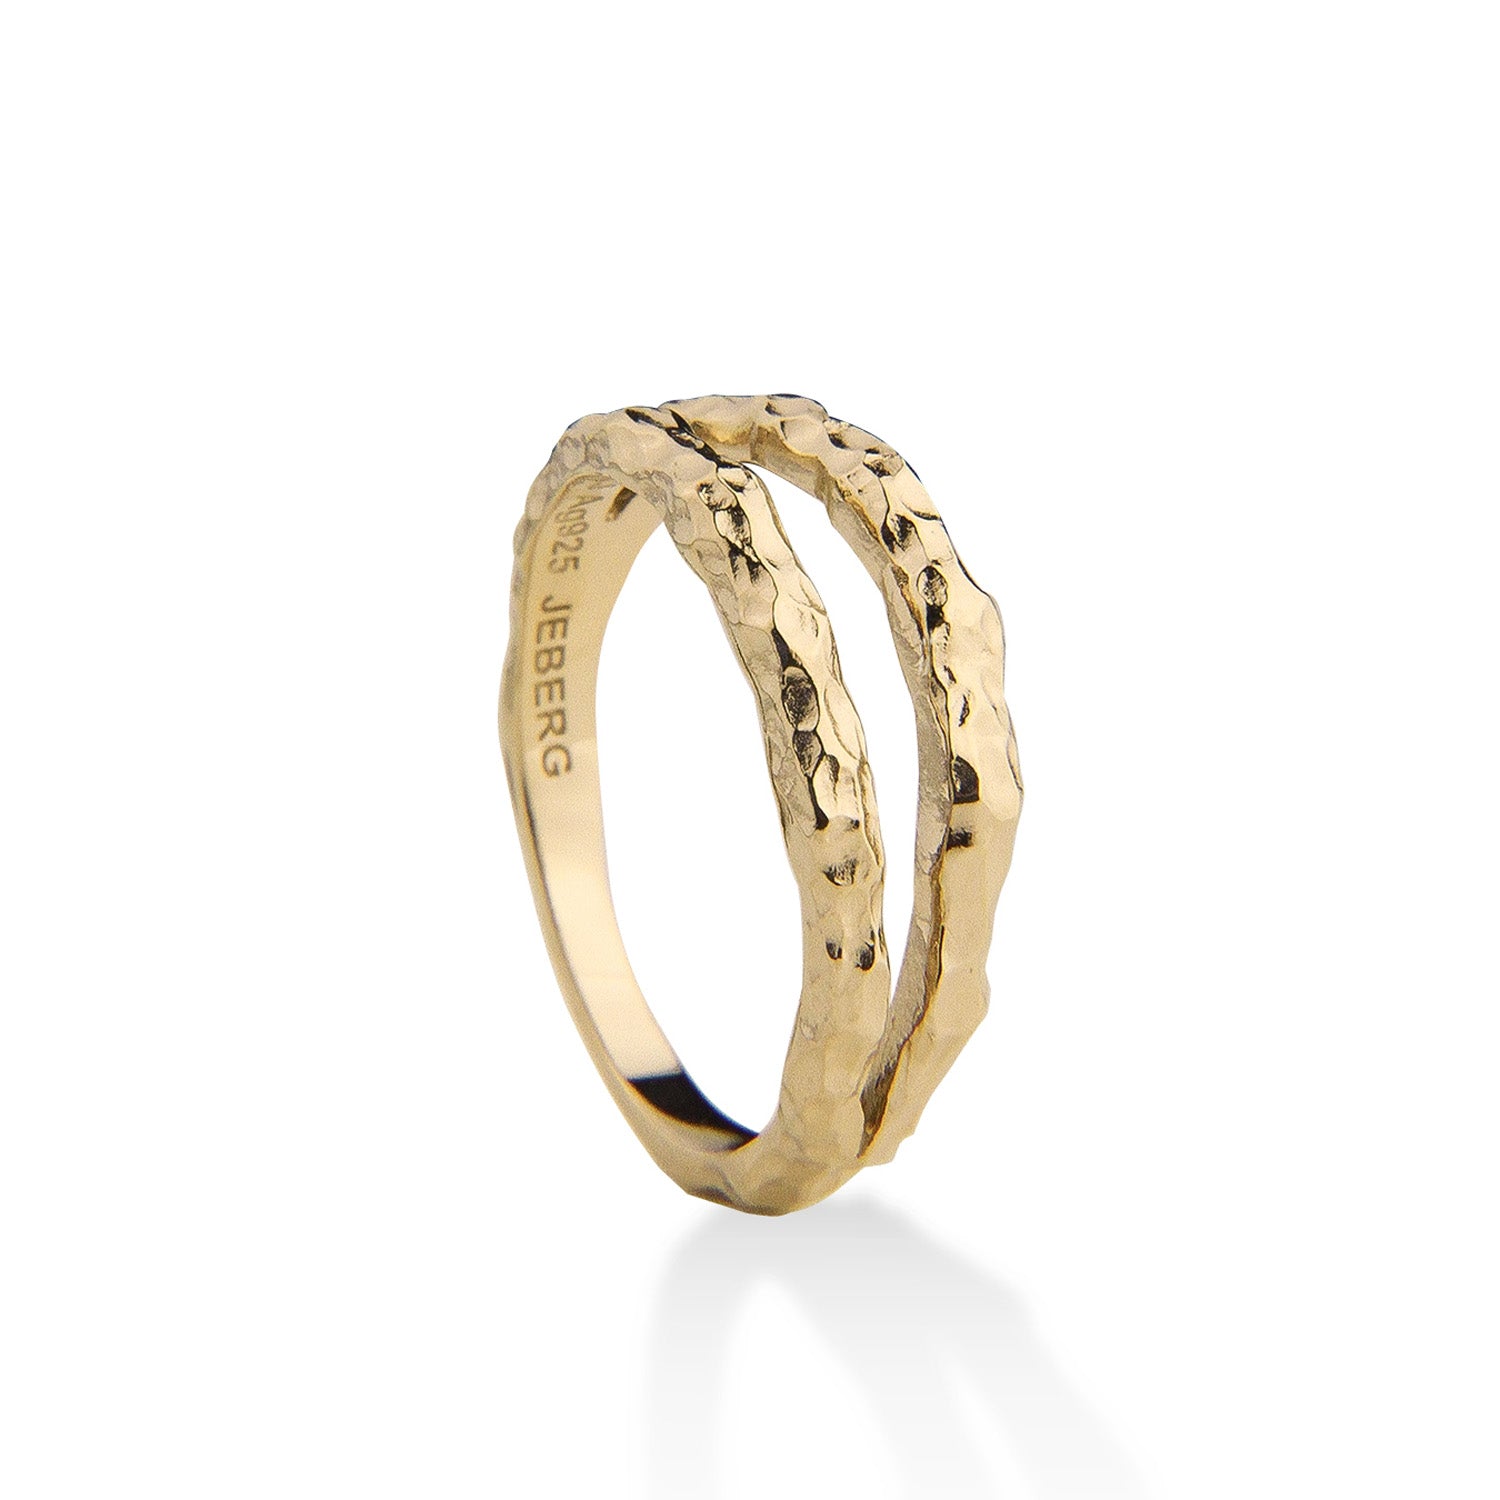 Se Jeberg Jewellery - I AM GOLD Double ring Forgyldt sølv sterlingsølv hos Vibholm.dk